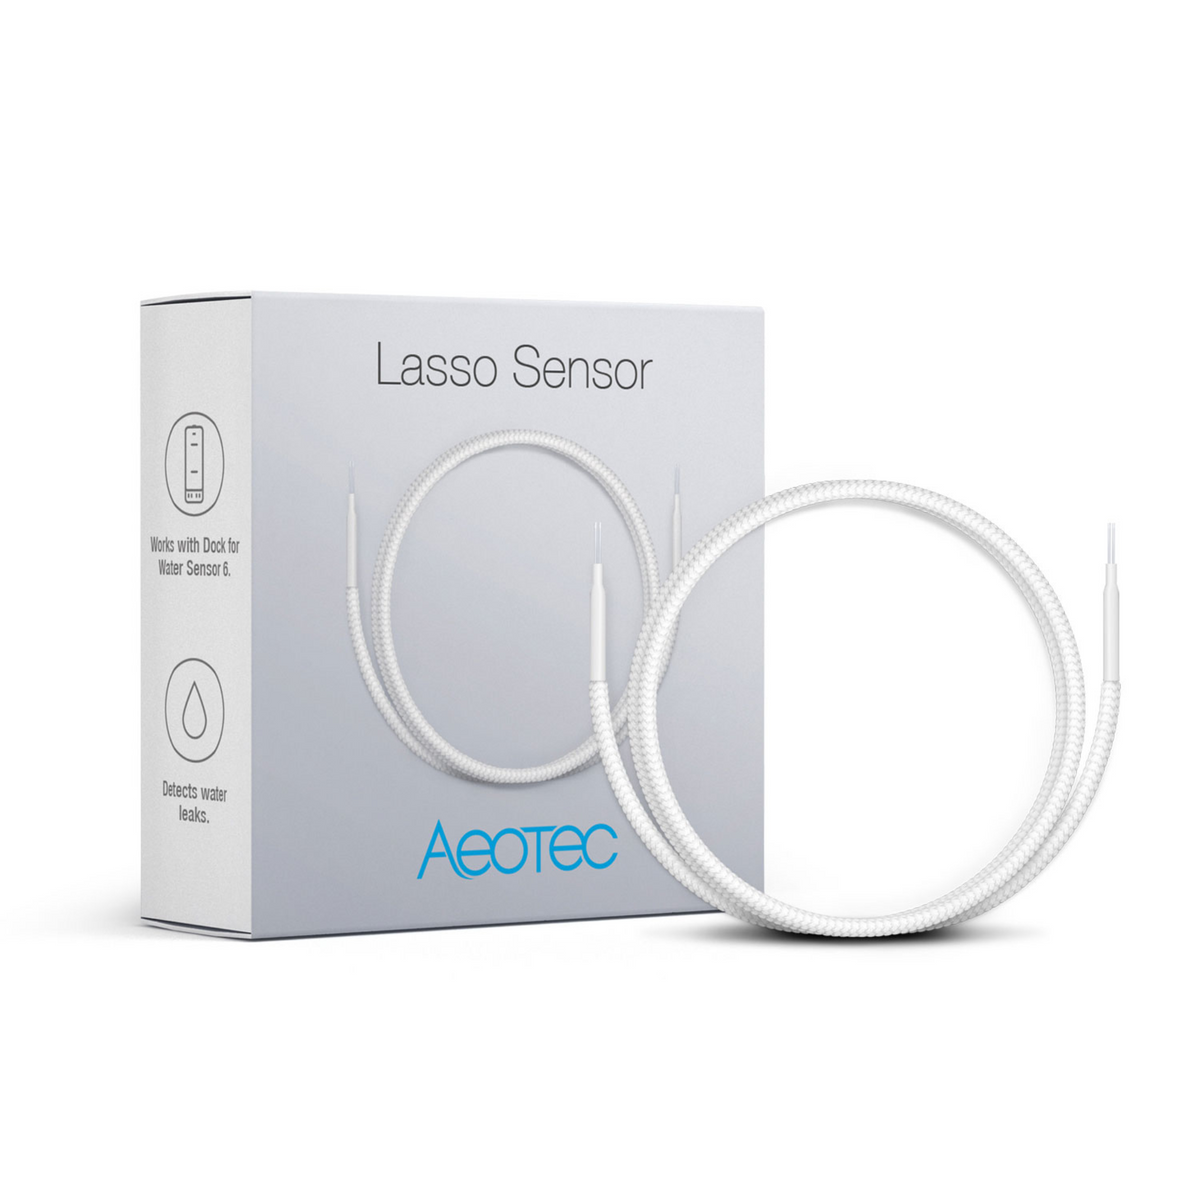 Aeotec Lasso Sensor for Water Sensor 6